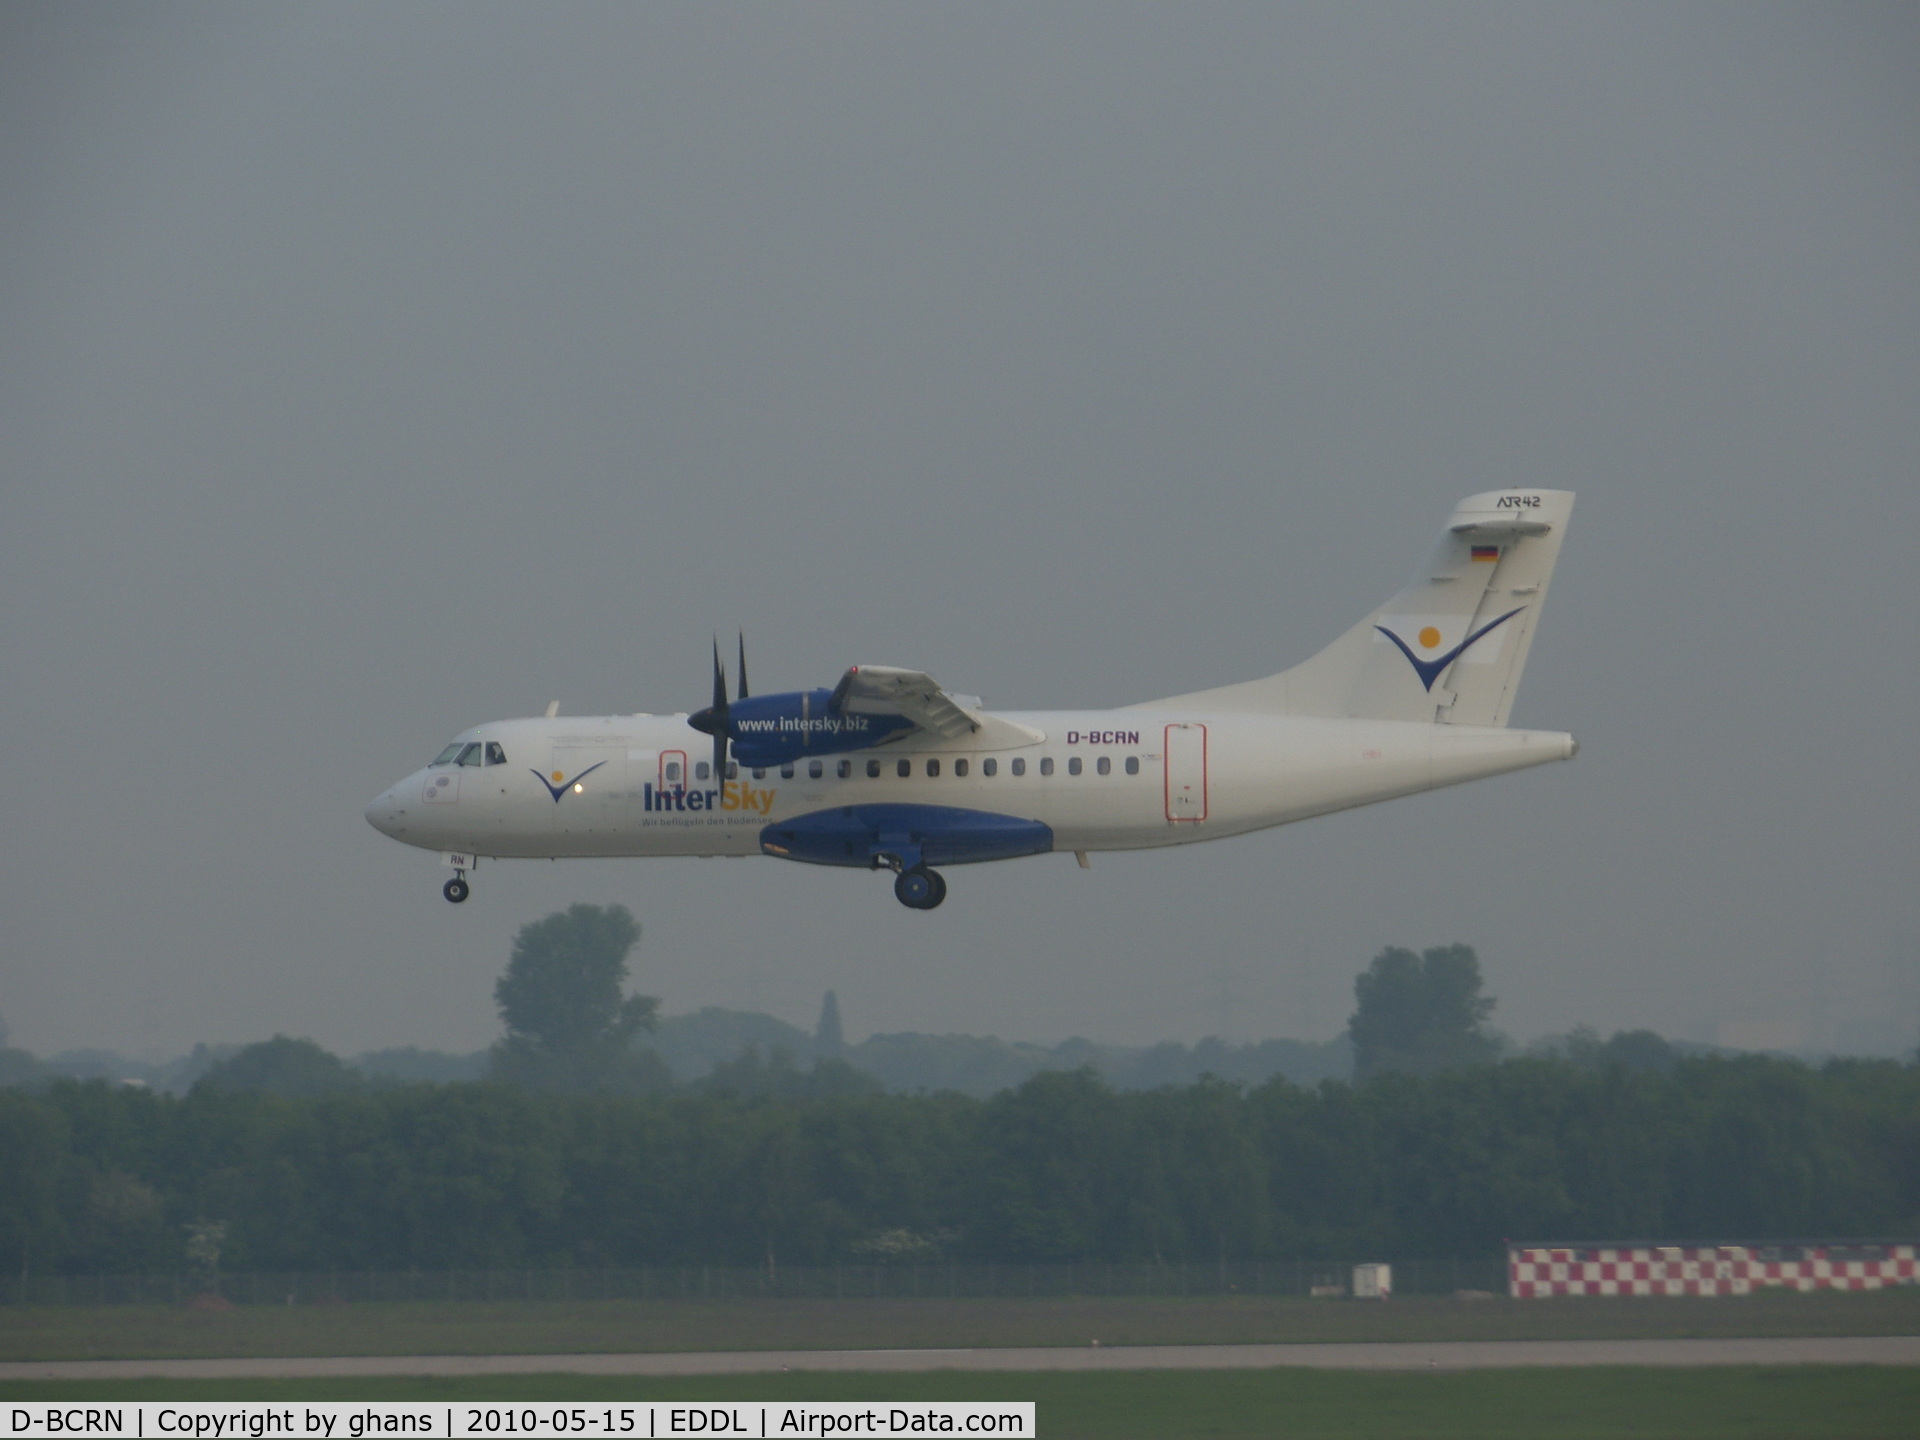 D-BCRN, 1992 ATR 42-300 C/N 329, Now flying for Intersky Austria